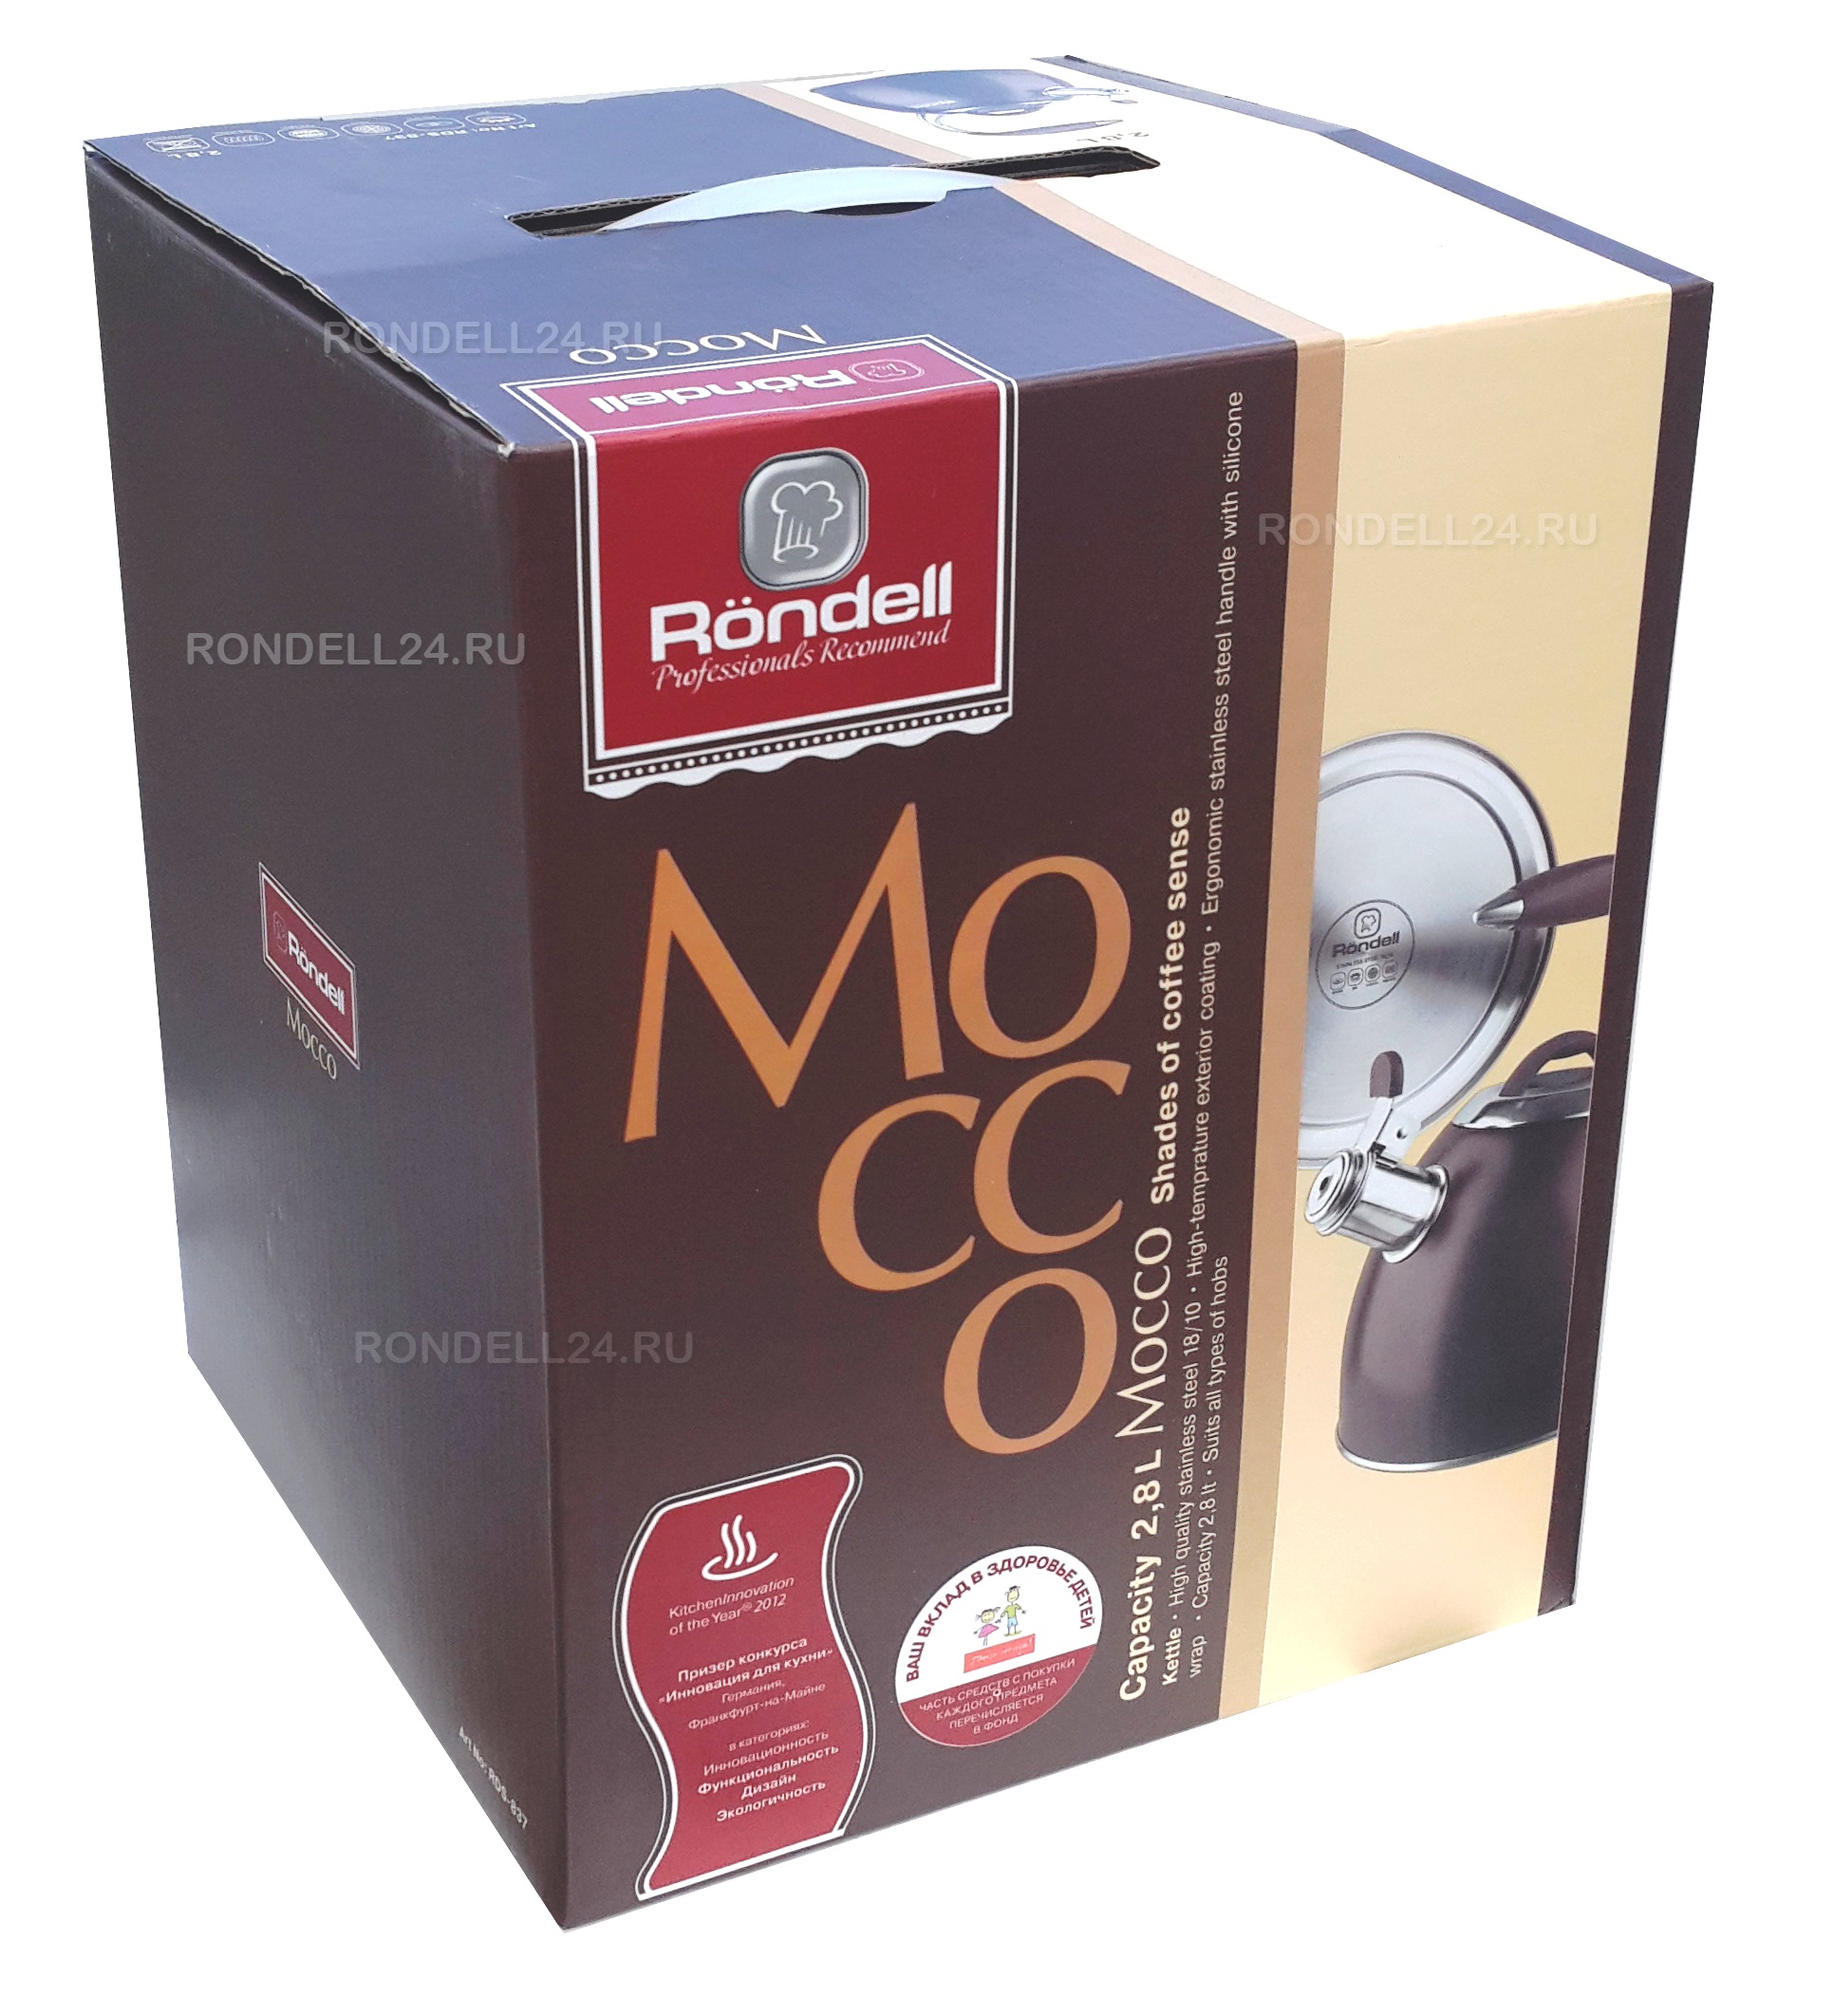 RDS-837 Чайник 2.8 л Mocco Rondell